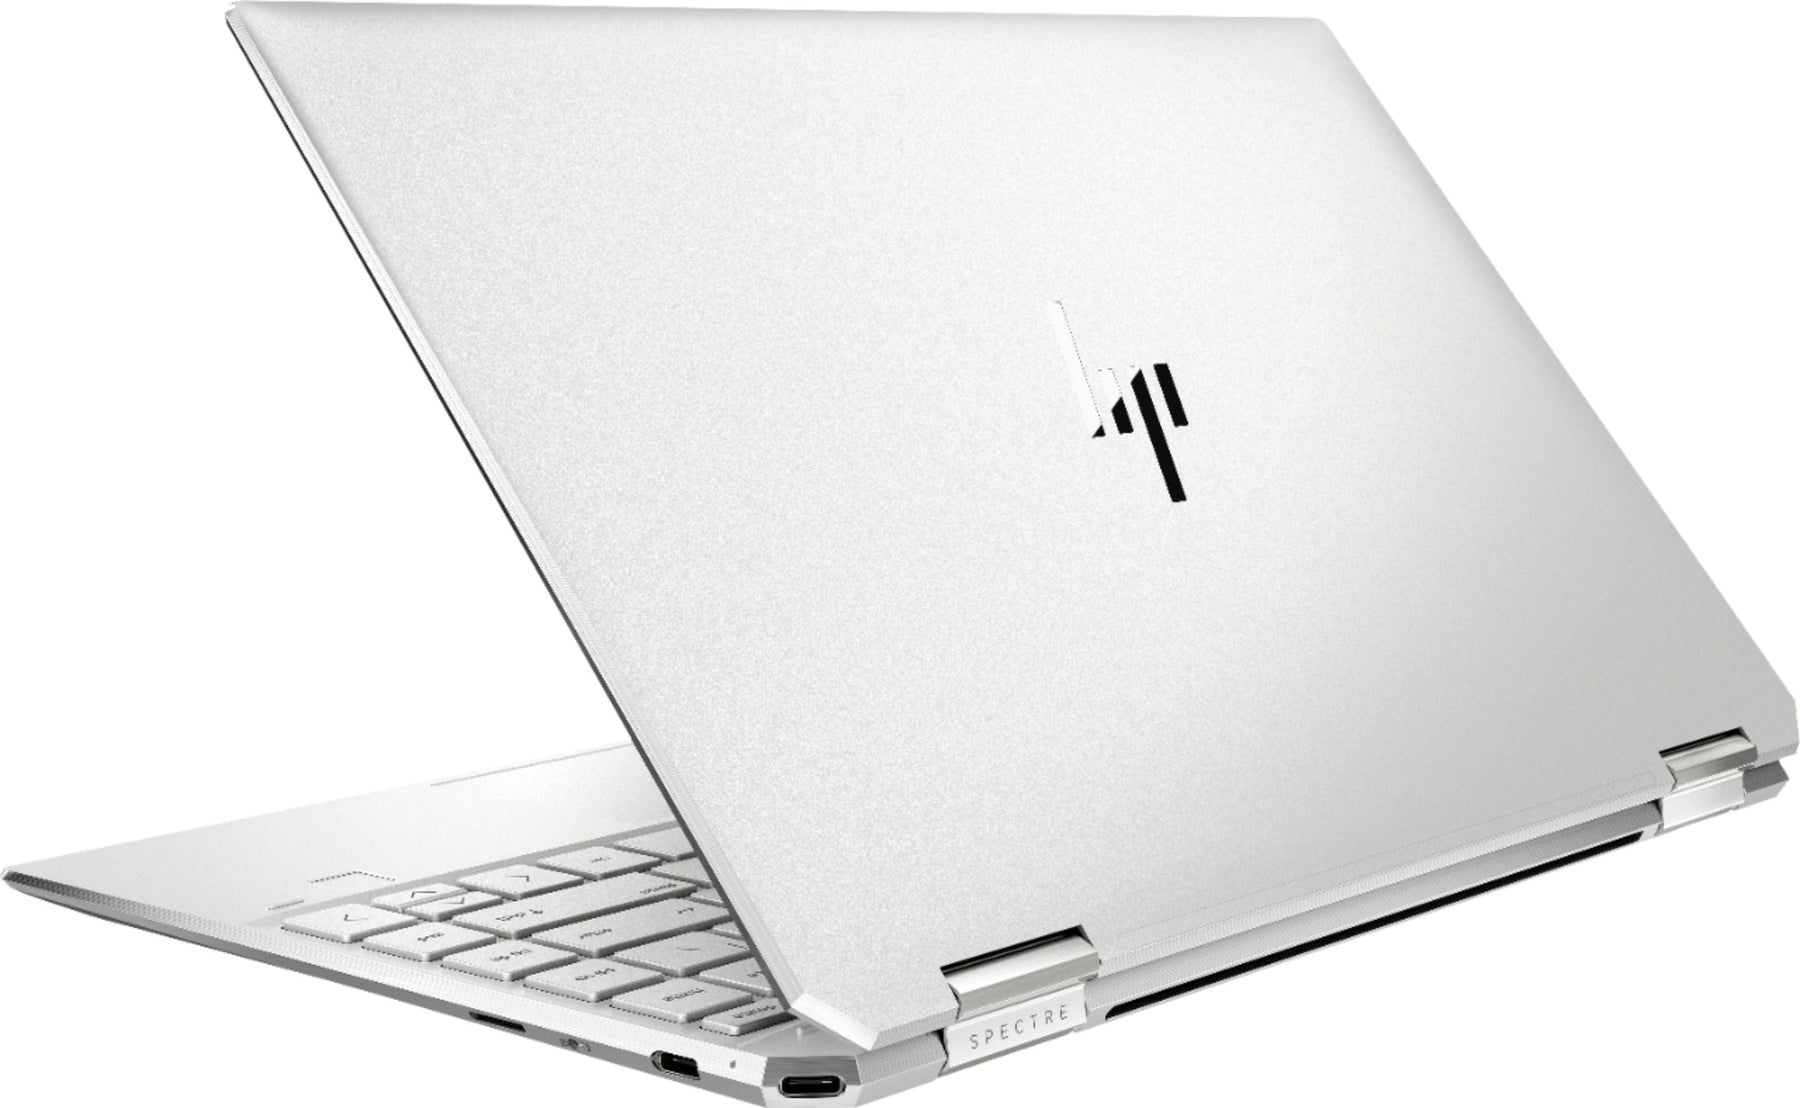 HP Spectre x360 Convertible 13.3" Laptop i7-7500U 512GB 16GB RAM - Very Good Condition